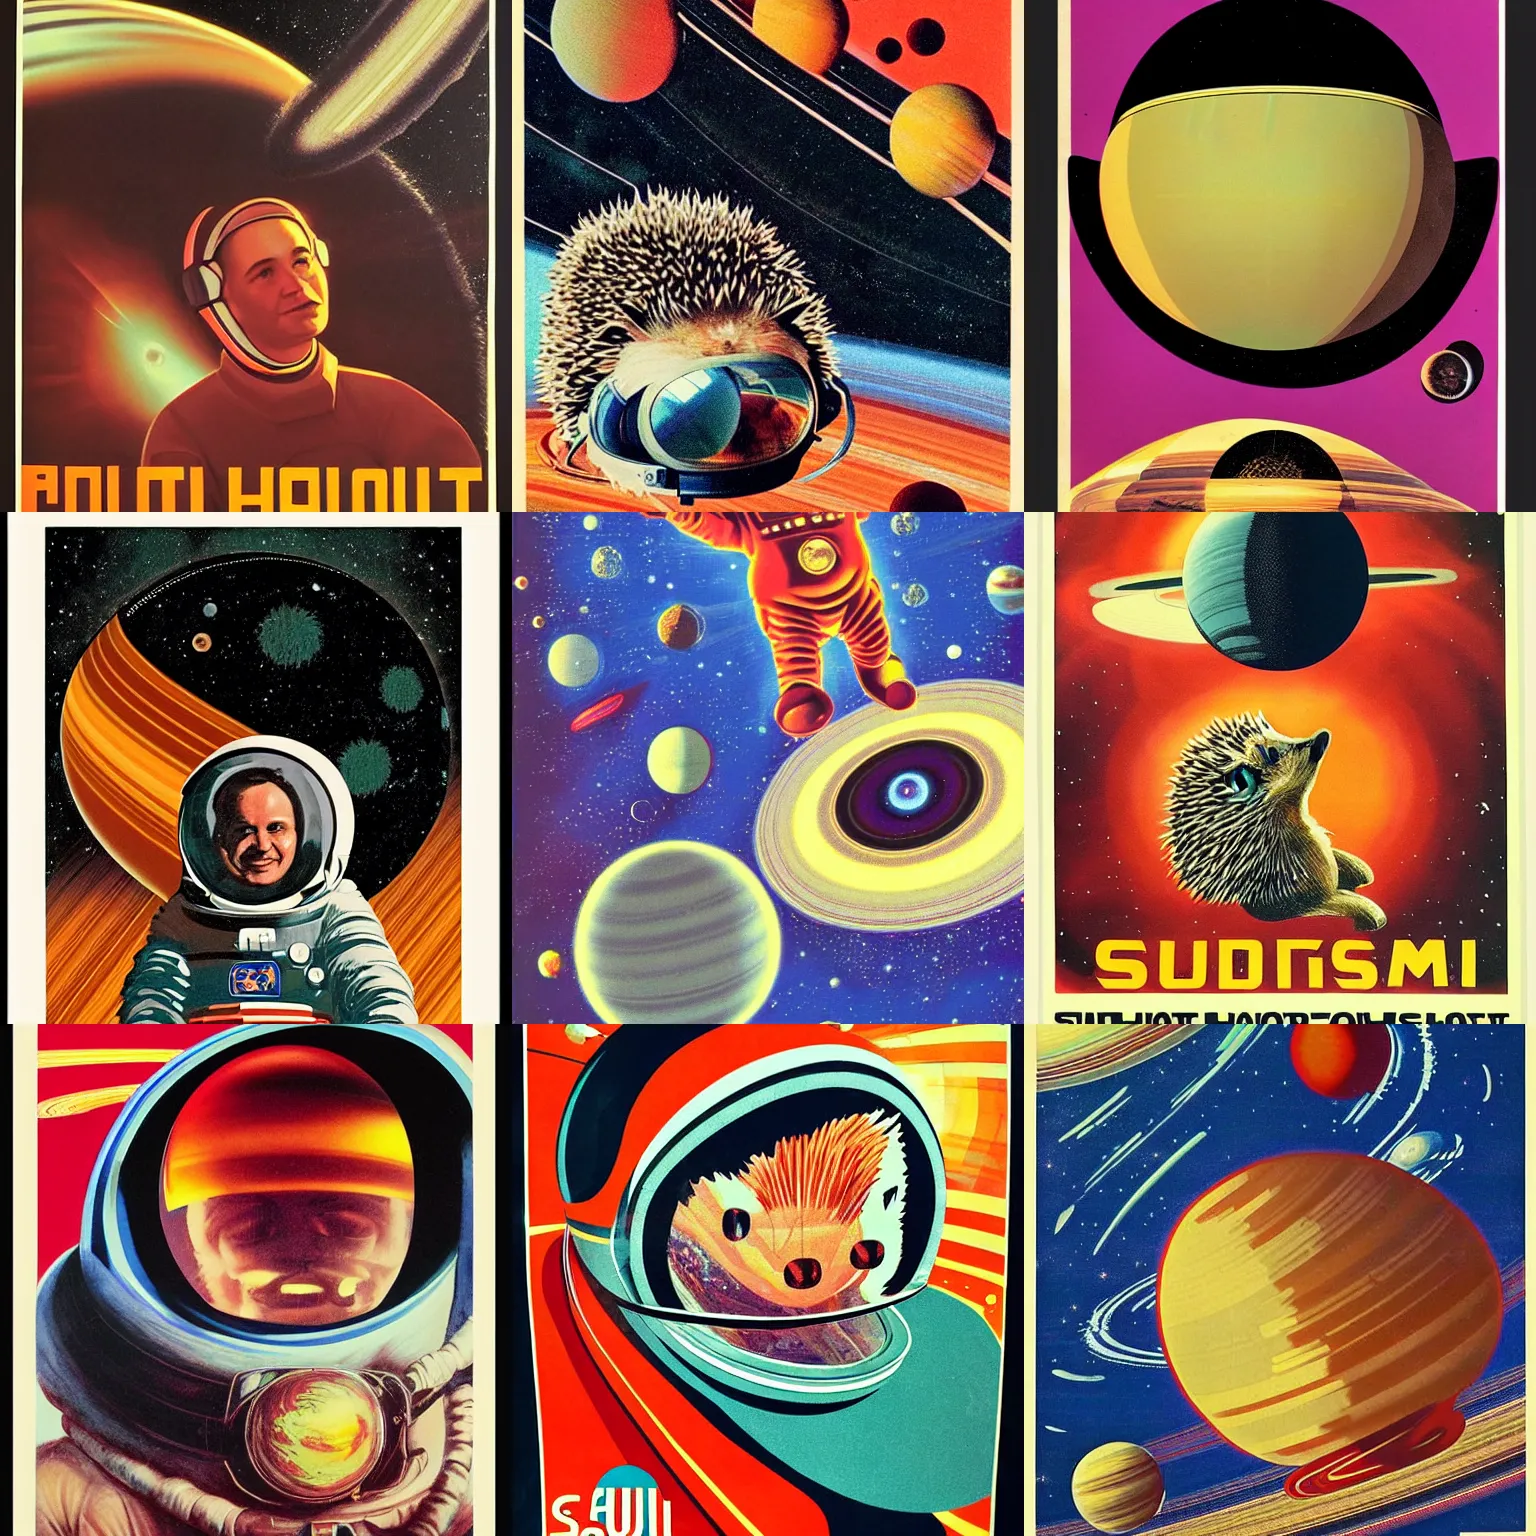 Prompt: Hedgehog cosmonaut portrait, planet saturn, 60s poster, 1972 Soviet